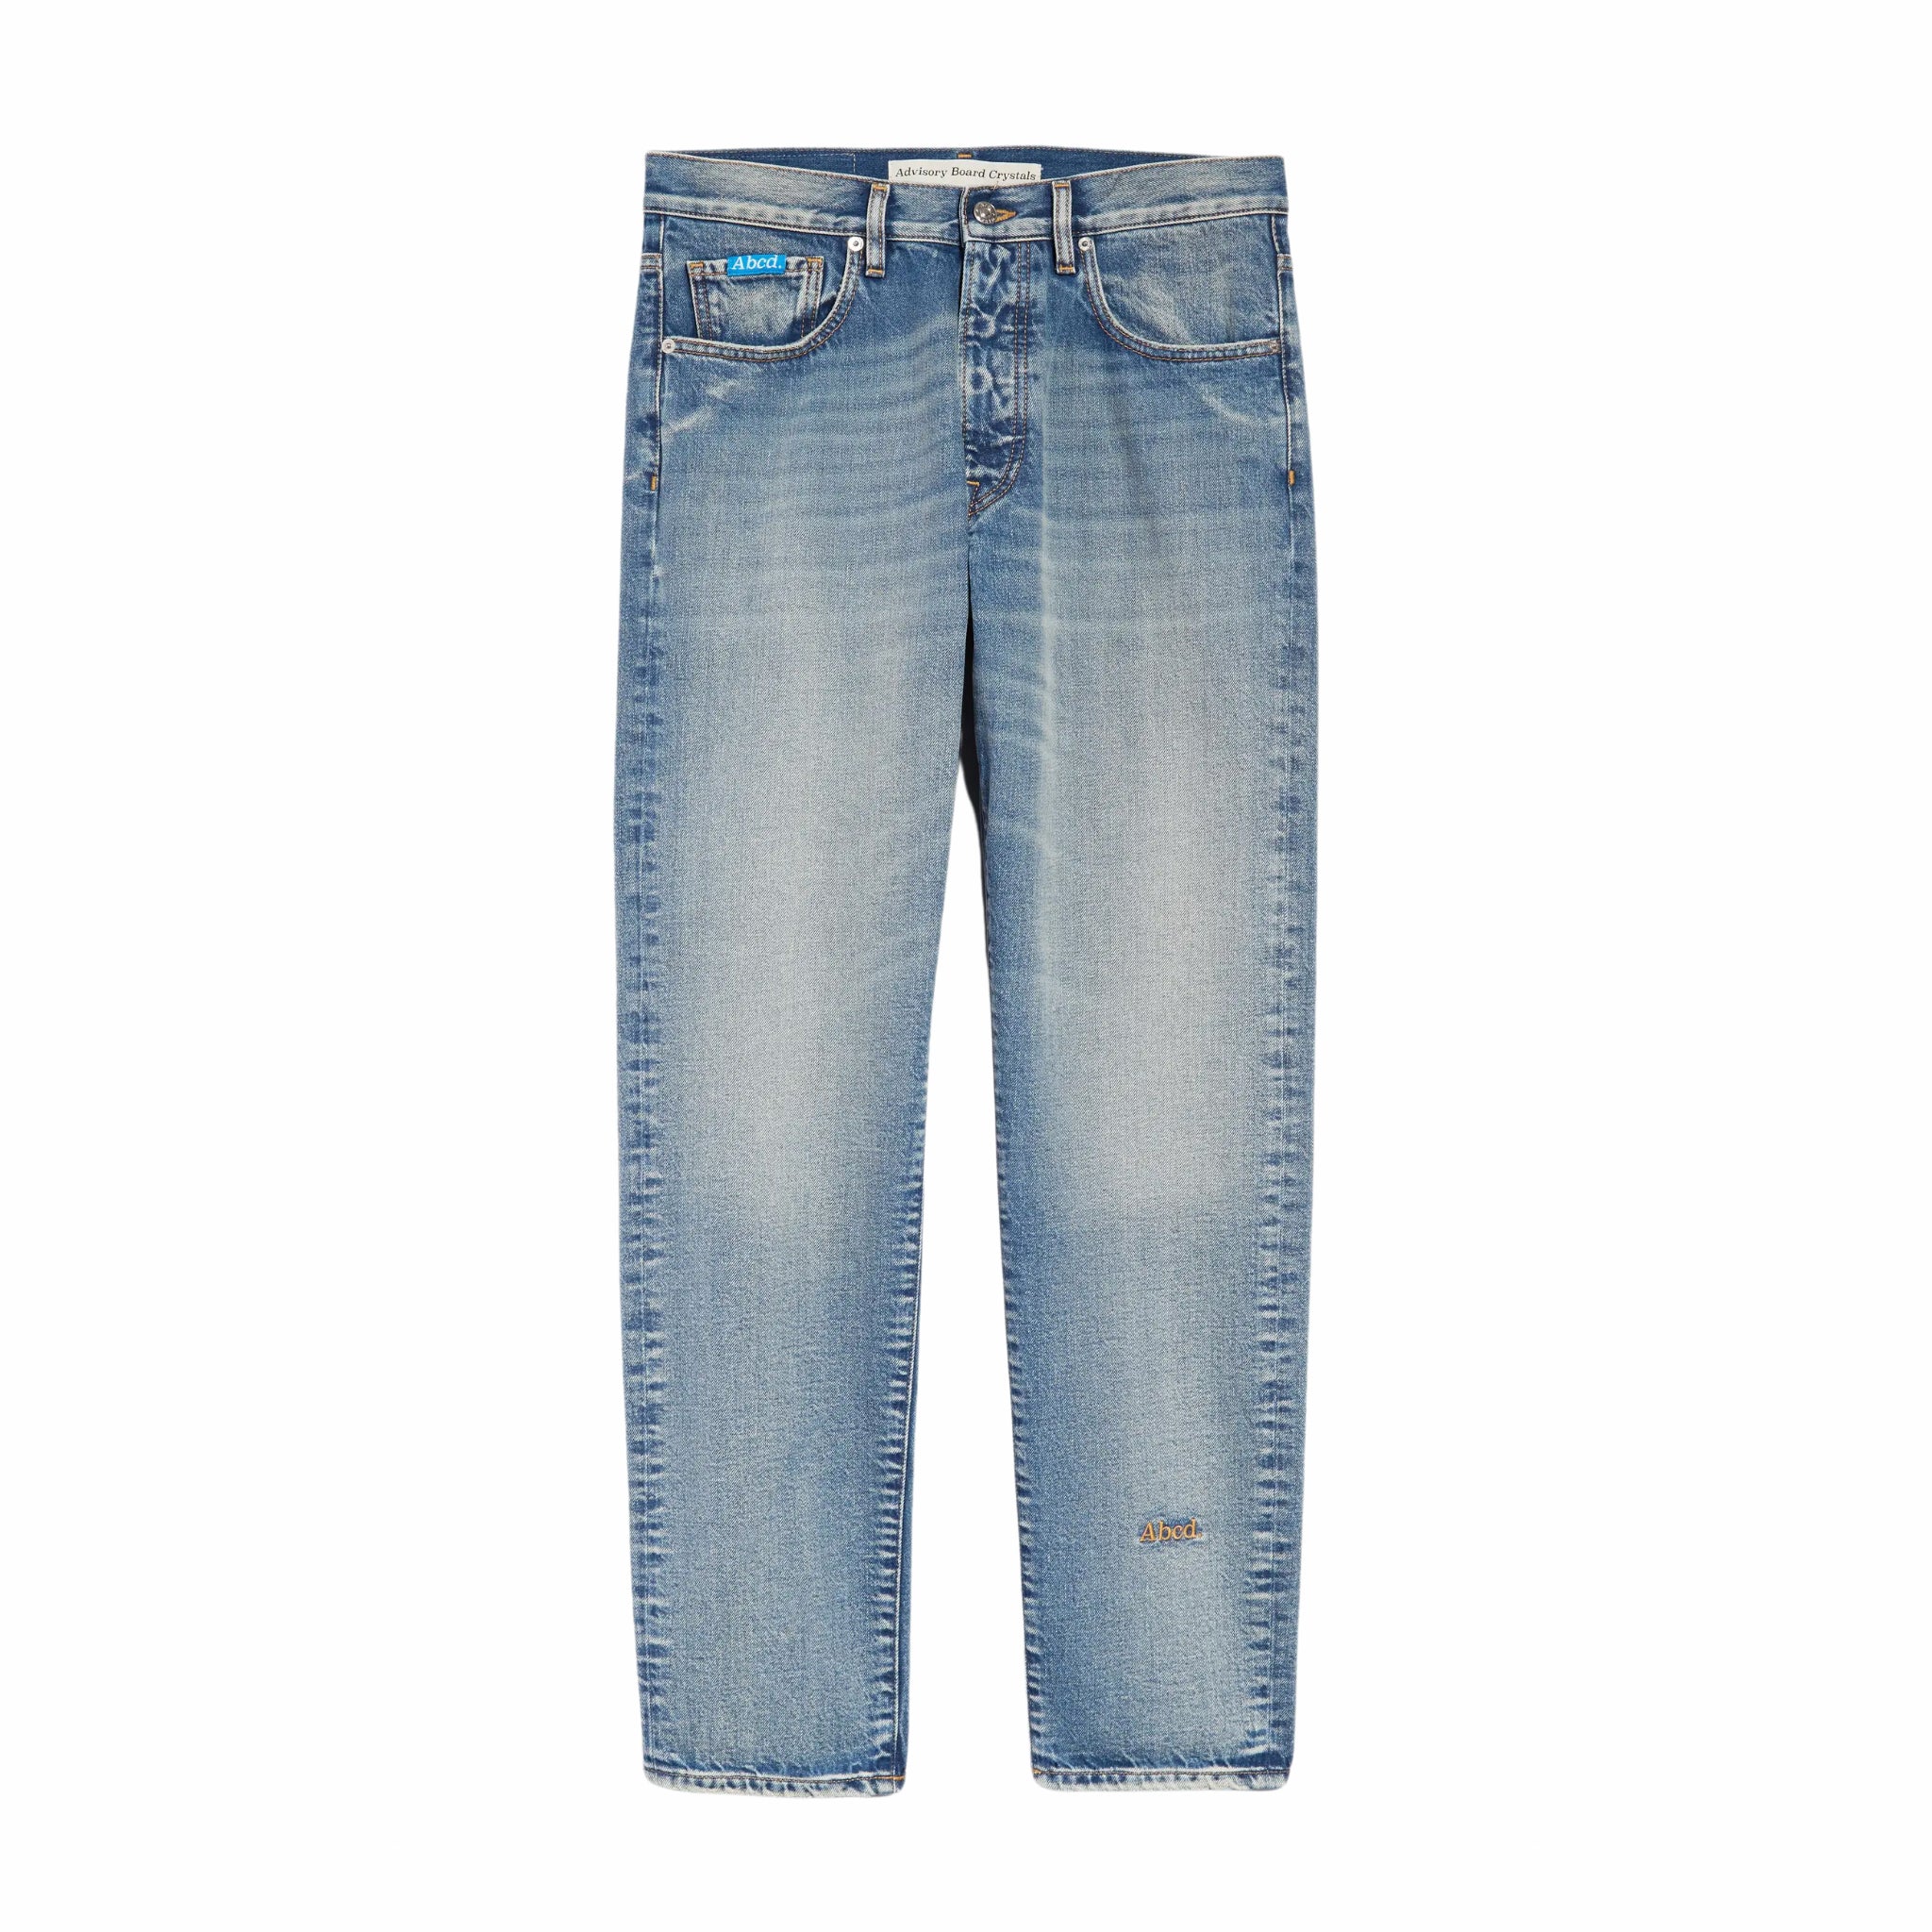 Abcd. Original Fit Jeans (Super Faded Blue) - August Shop